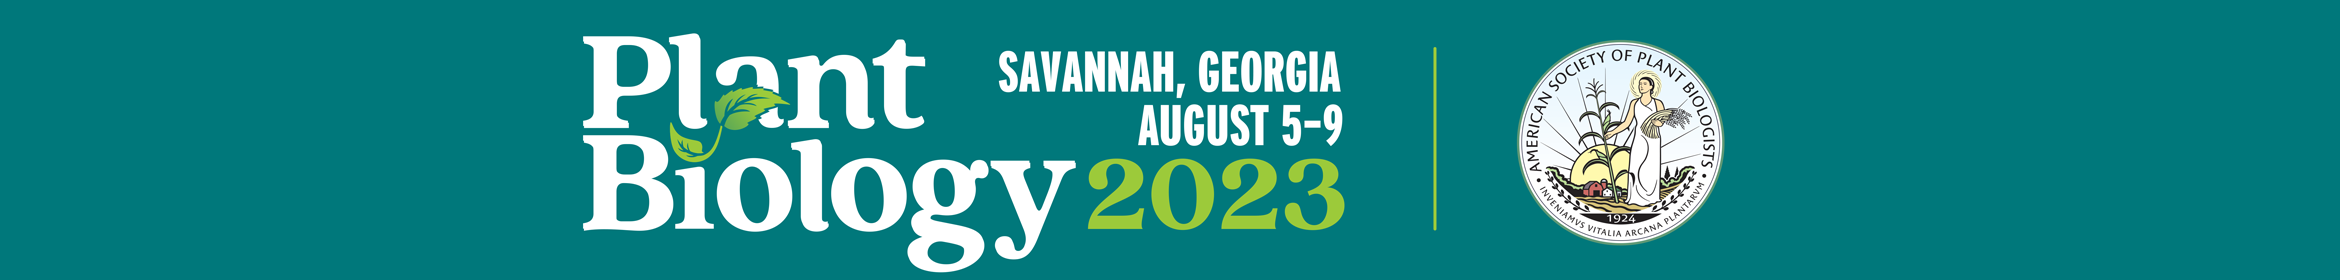 Plant Biology 2023 Annual Meeting Main banner